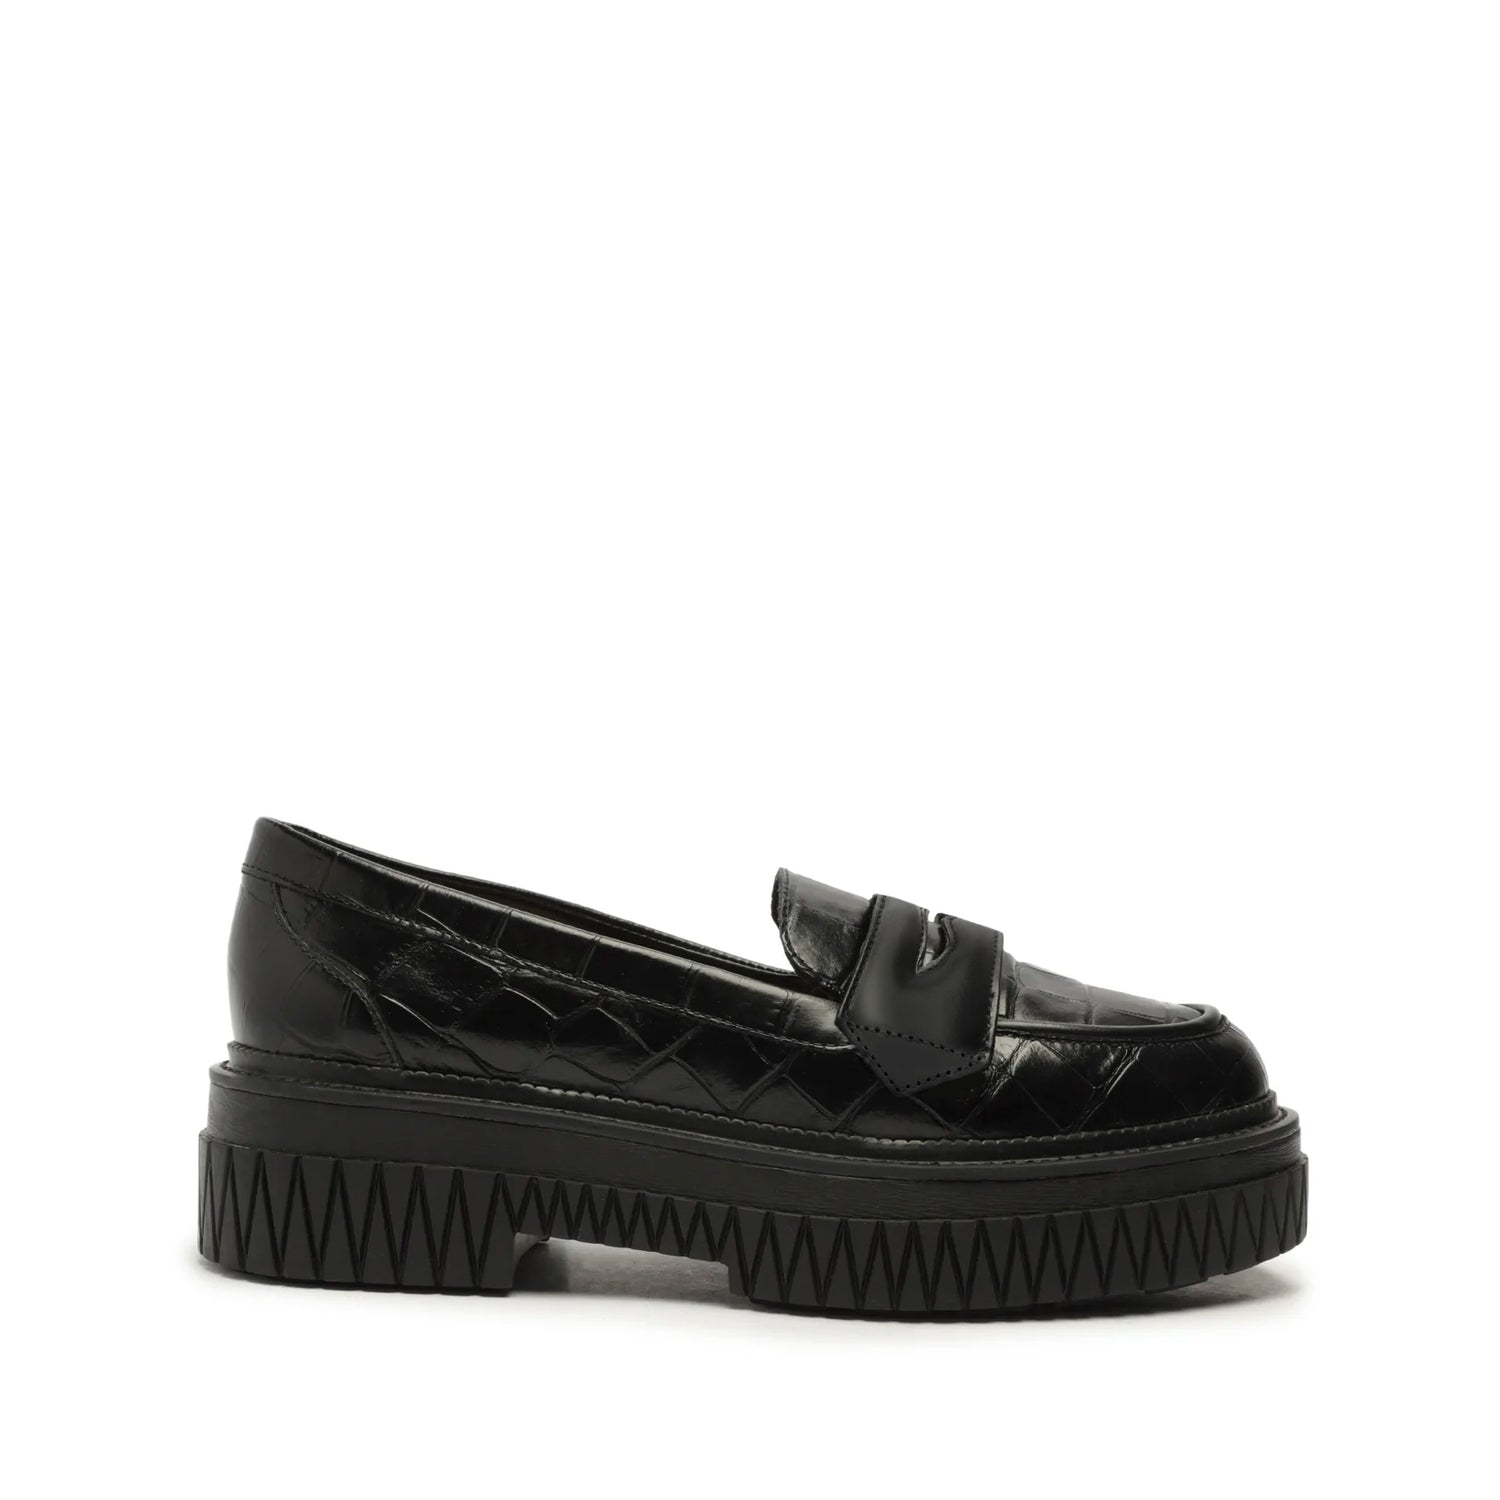 Viola Crocodile-Embossed Leather Flat Flats Fall 22 5 Black Crocodile-Embossed Leather - Schutz Shoes